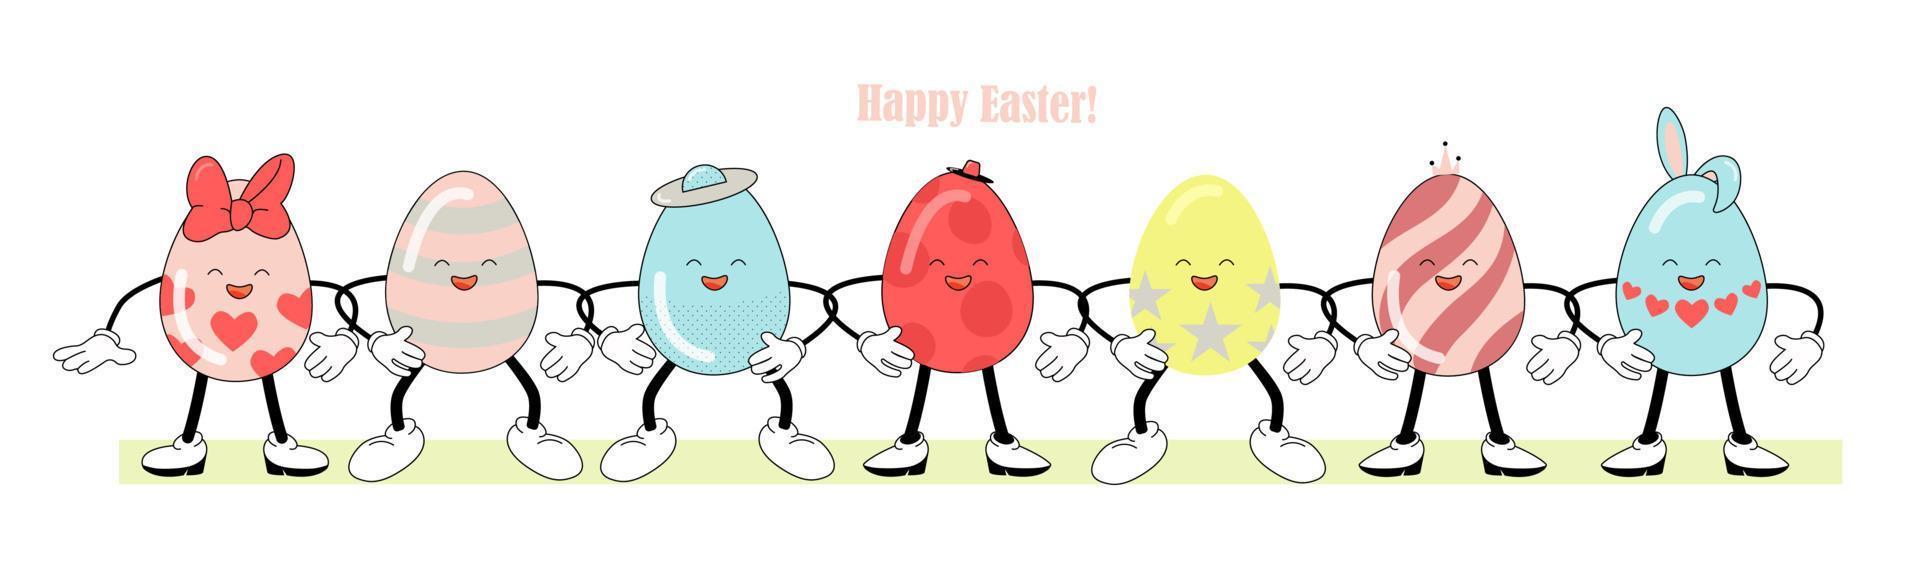 pintado Pascua de Resurrección huevos - gracioso caracteres, retro atmósfera. contento Pascua de Resurrección letras. brillante vector ilustración